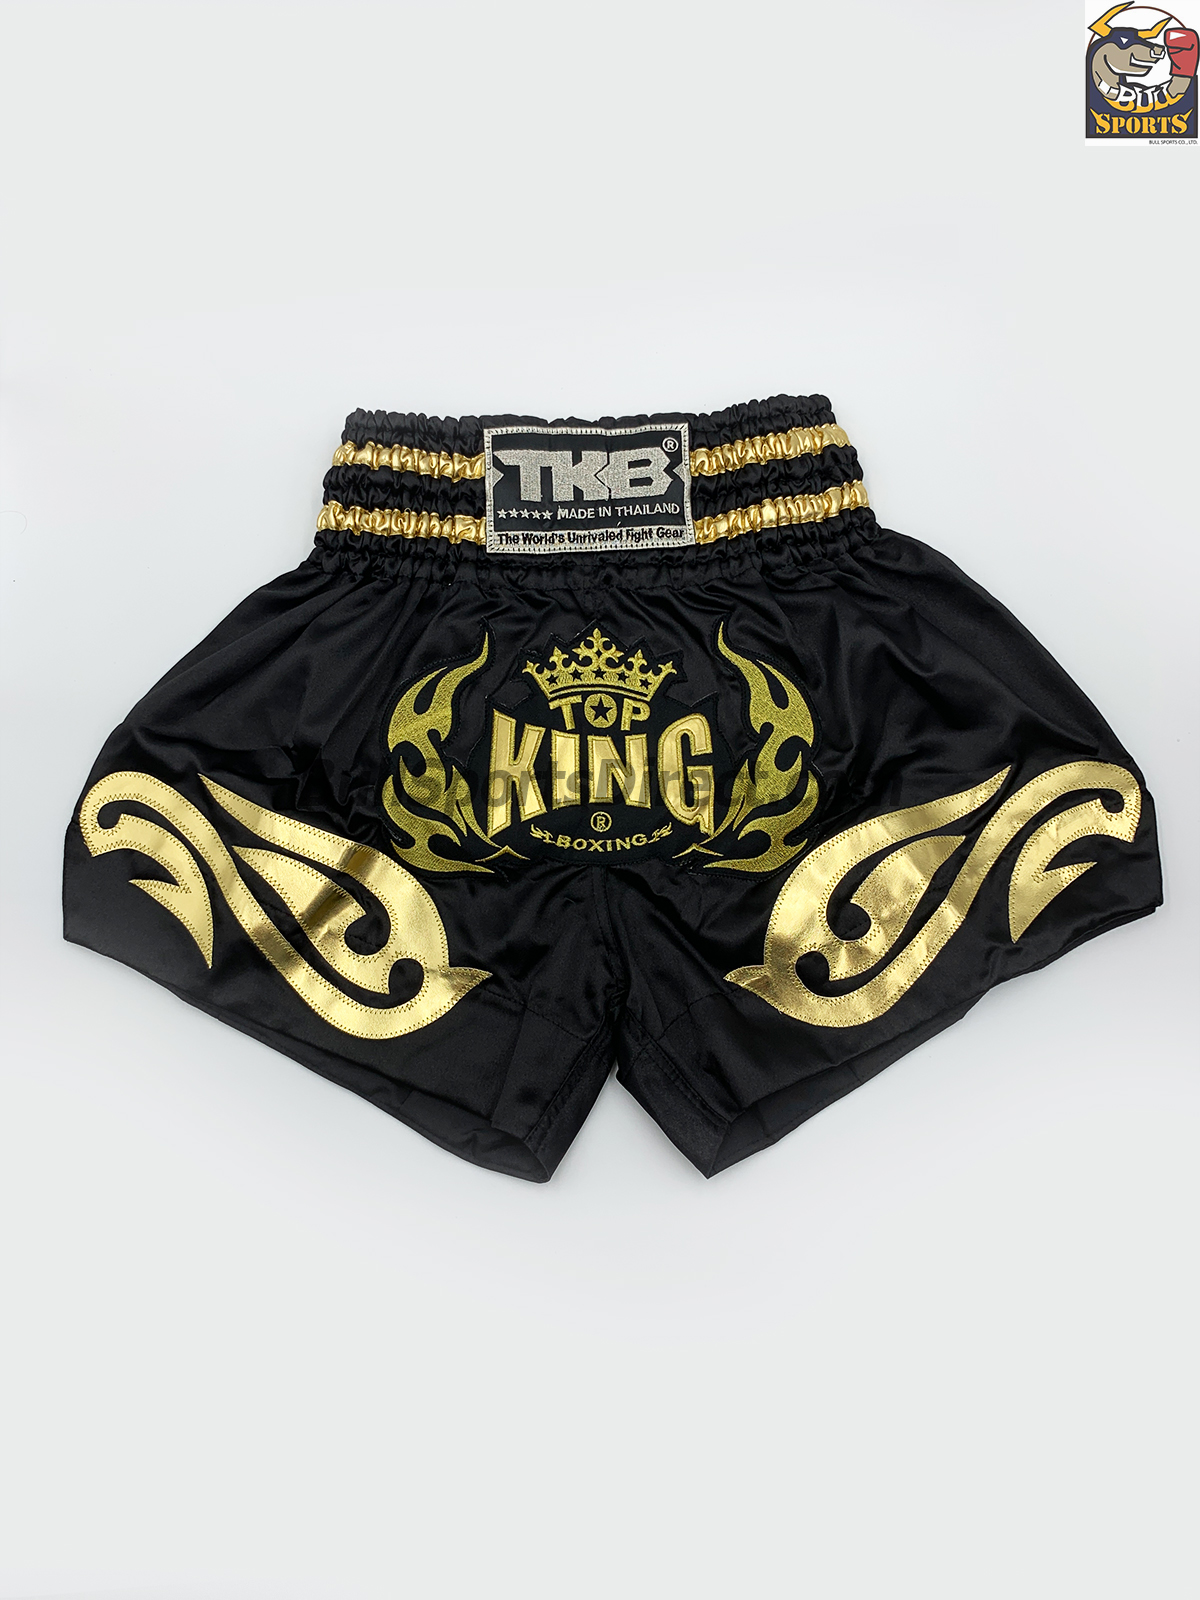 Top King Muay Thai Kickboxing Shorts Black Gold 